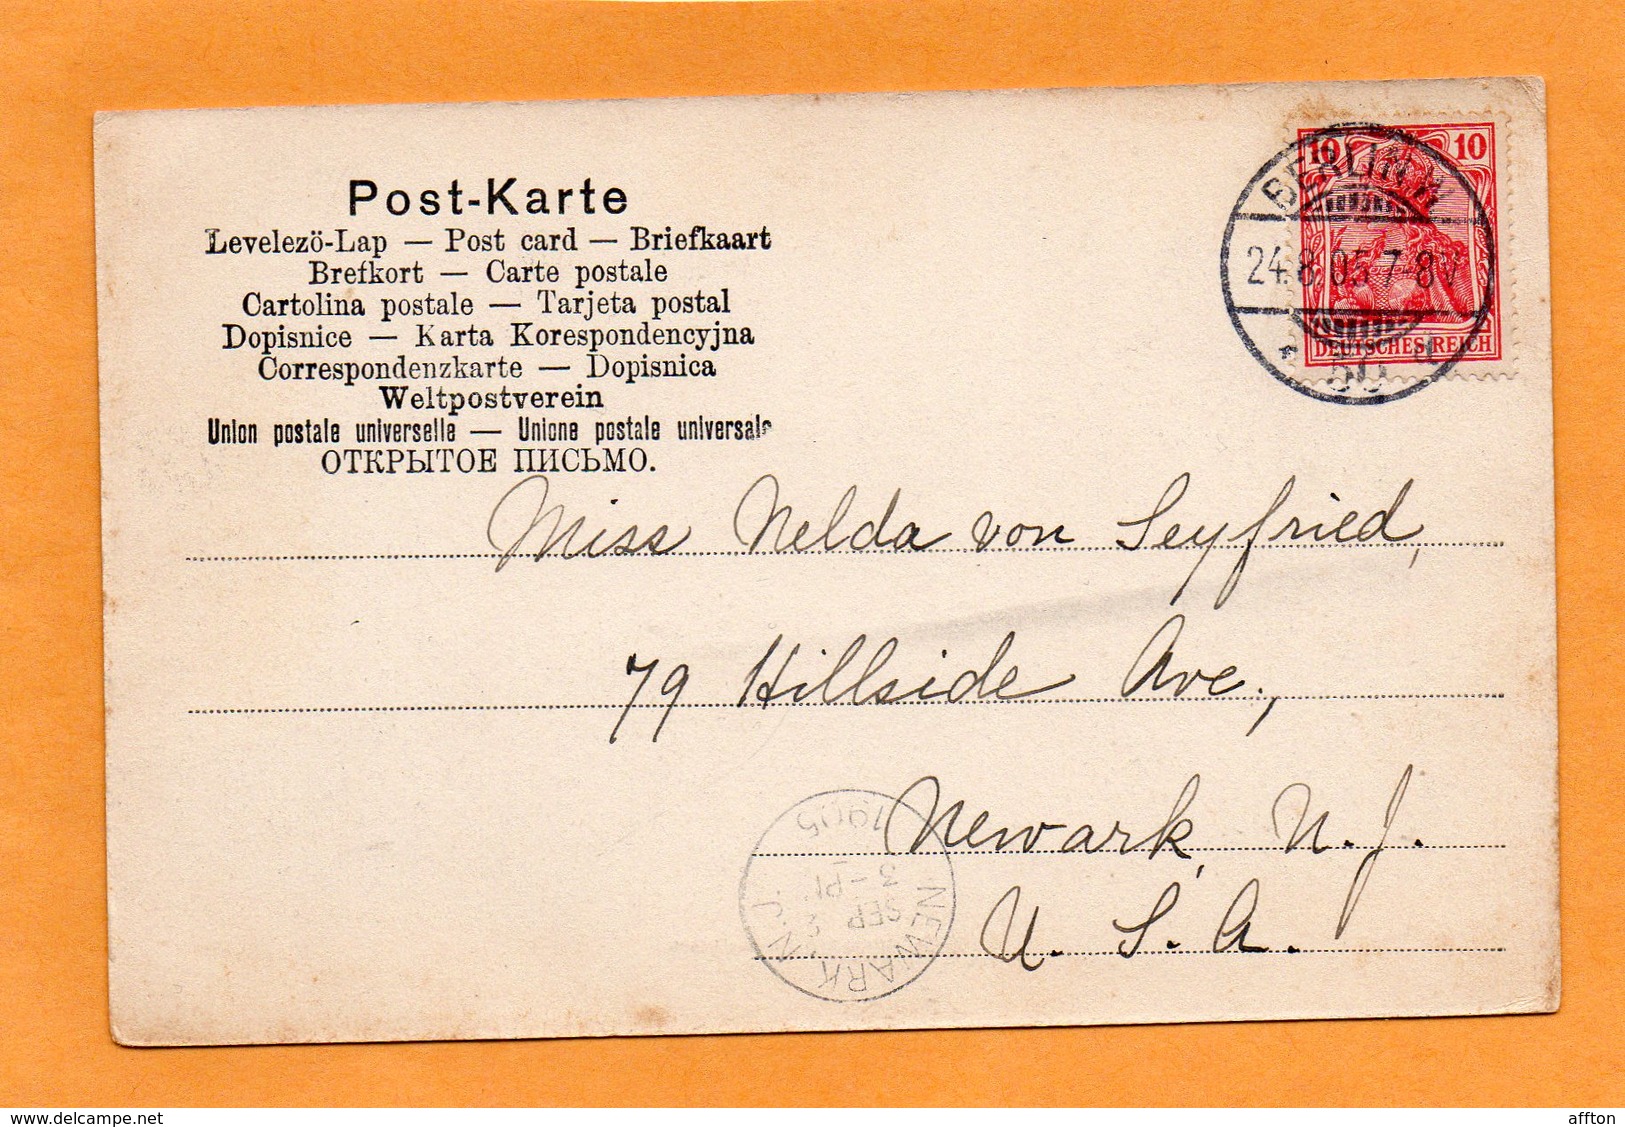 Berlin 1905 Postcard - Mitte